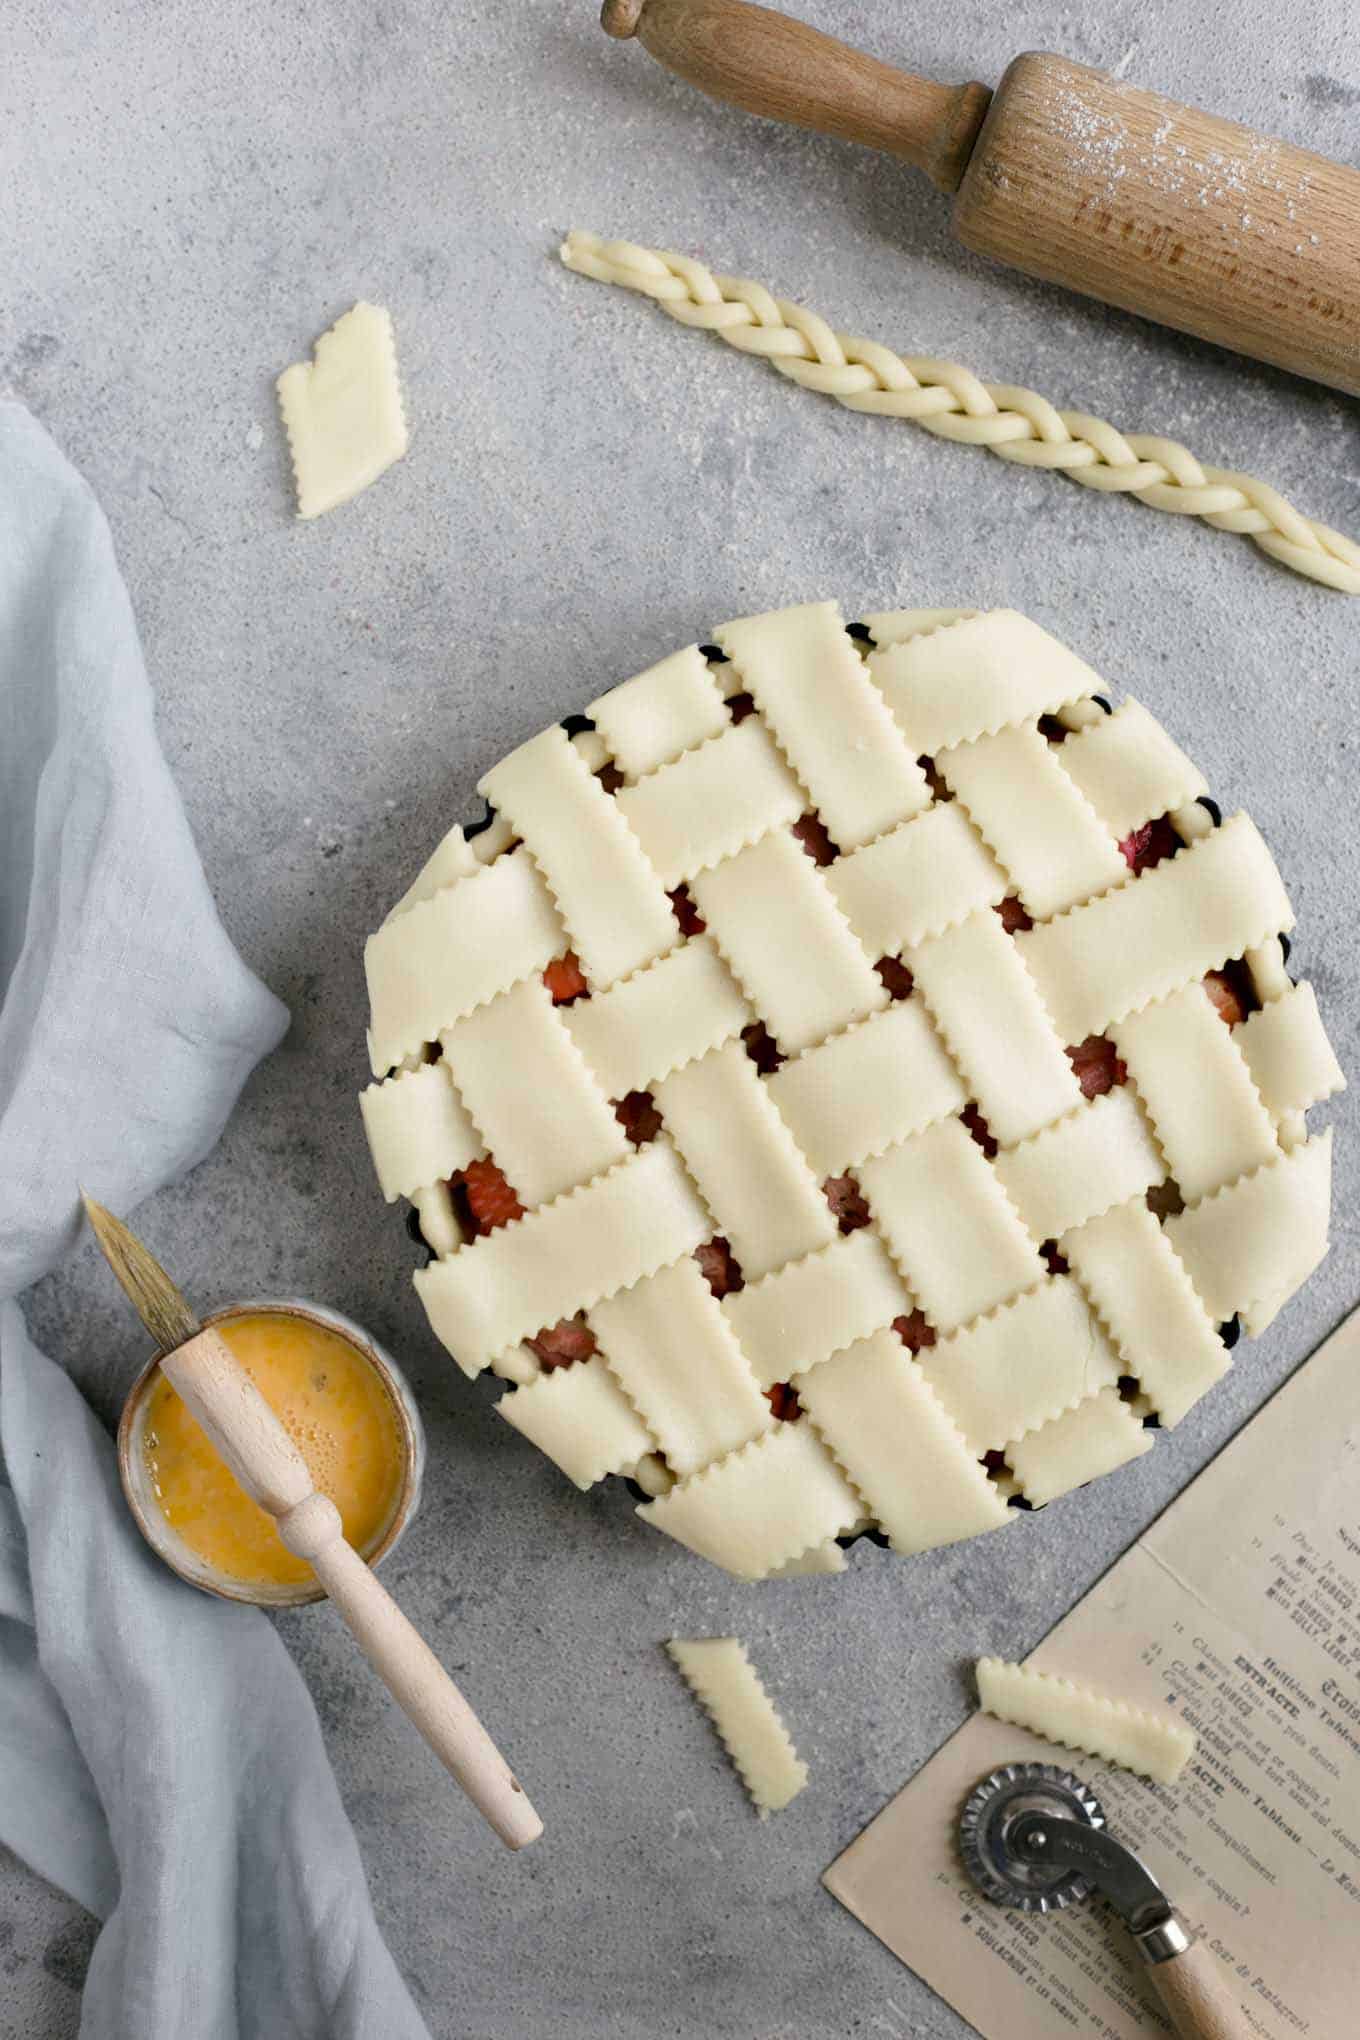 Rhubarb strawberry pie with lattice top. Delicious pie, full of classic flavours! #vegan #vegetarian #rhubarb #pie | via @annabanana.co